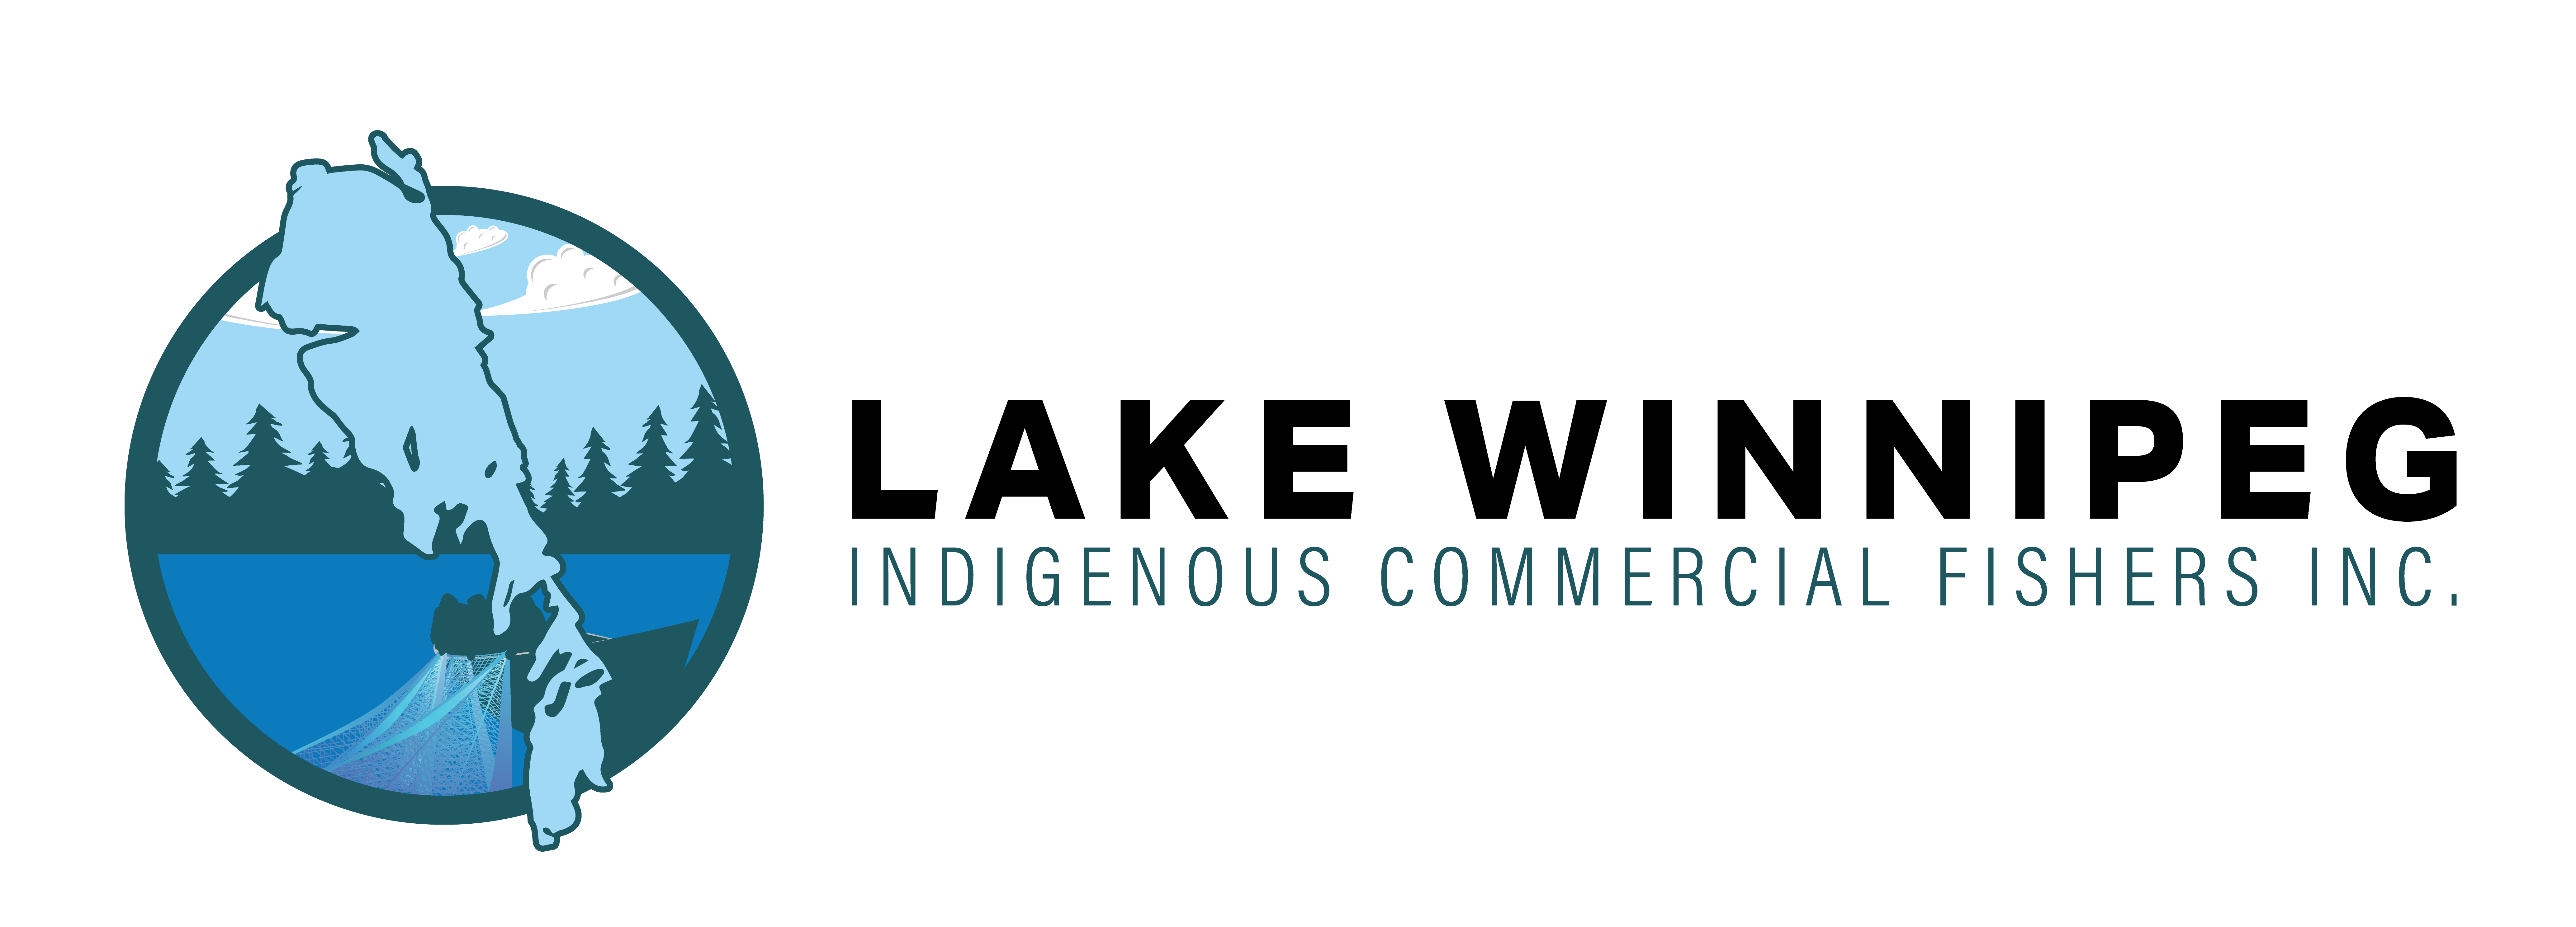 Lake Winnipeg Indigenous Commercial Fishers Inc.